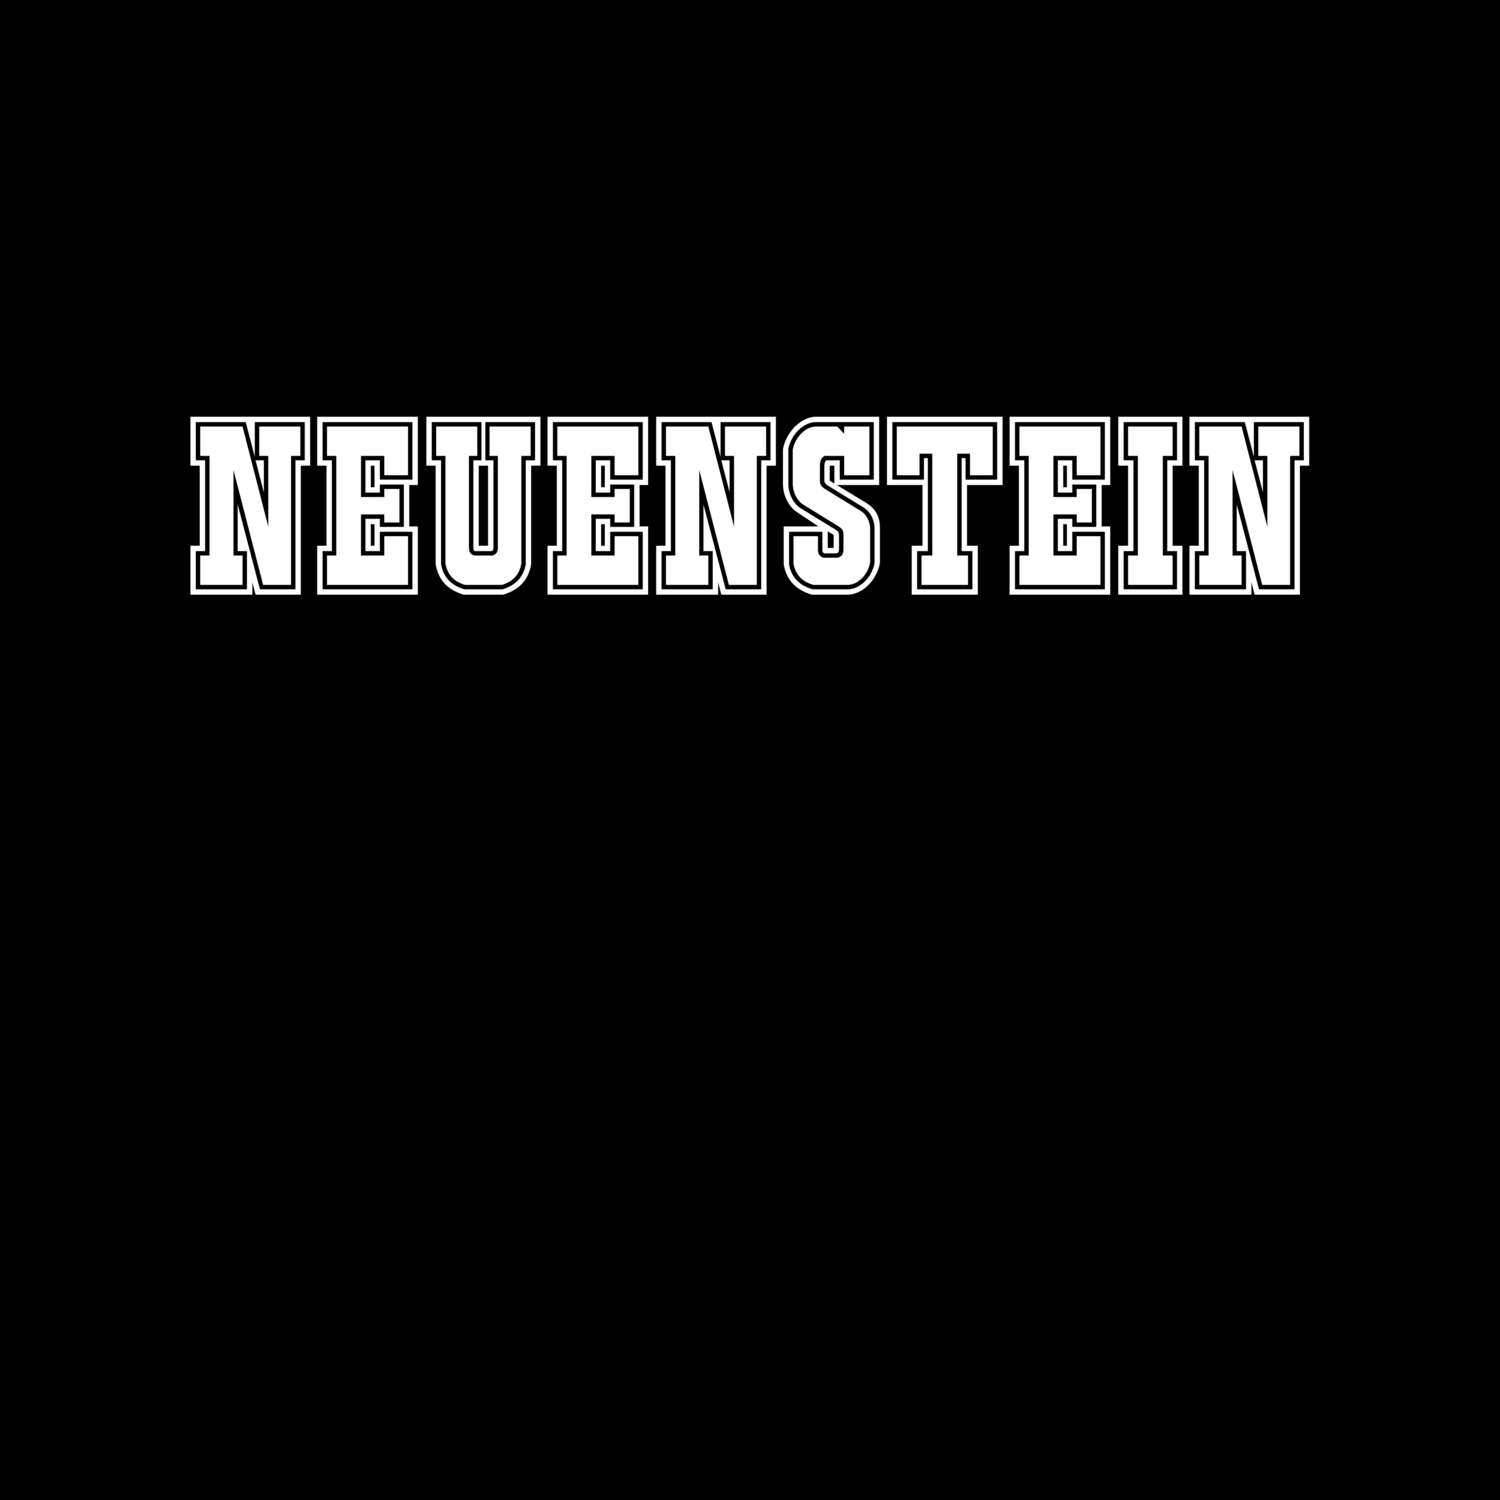 Neuenstein T-Shirt »Classic«